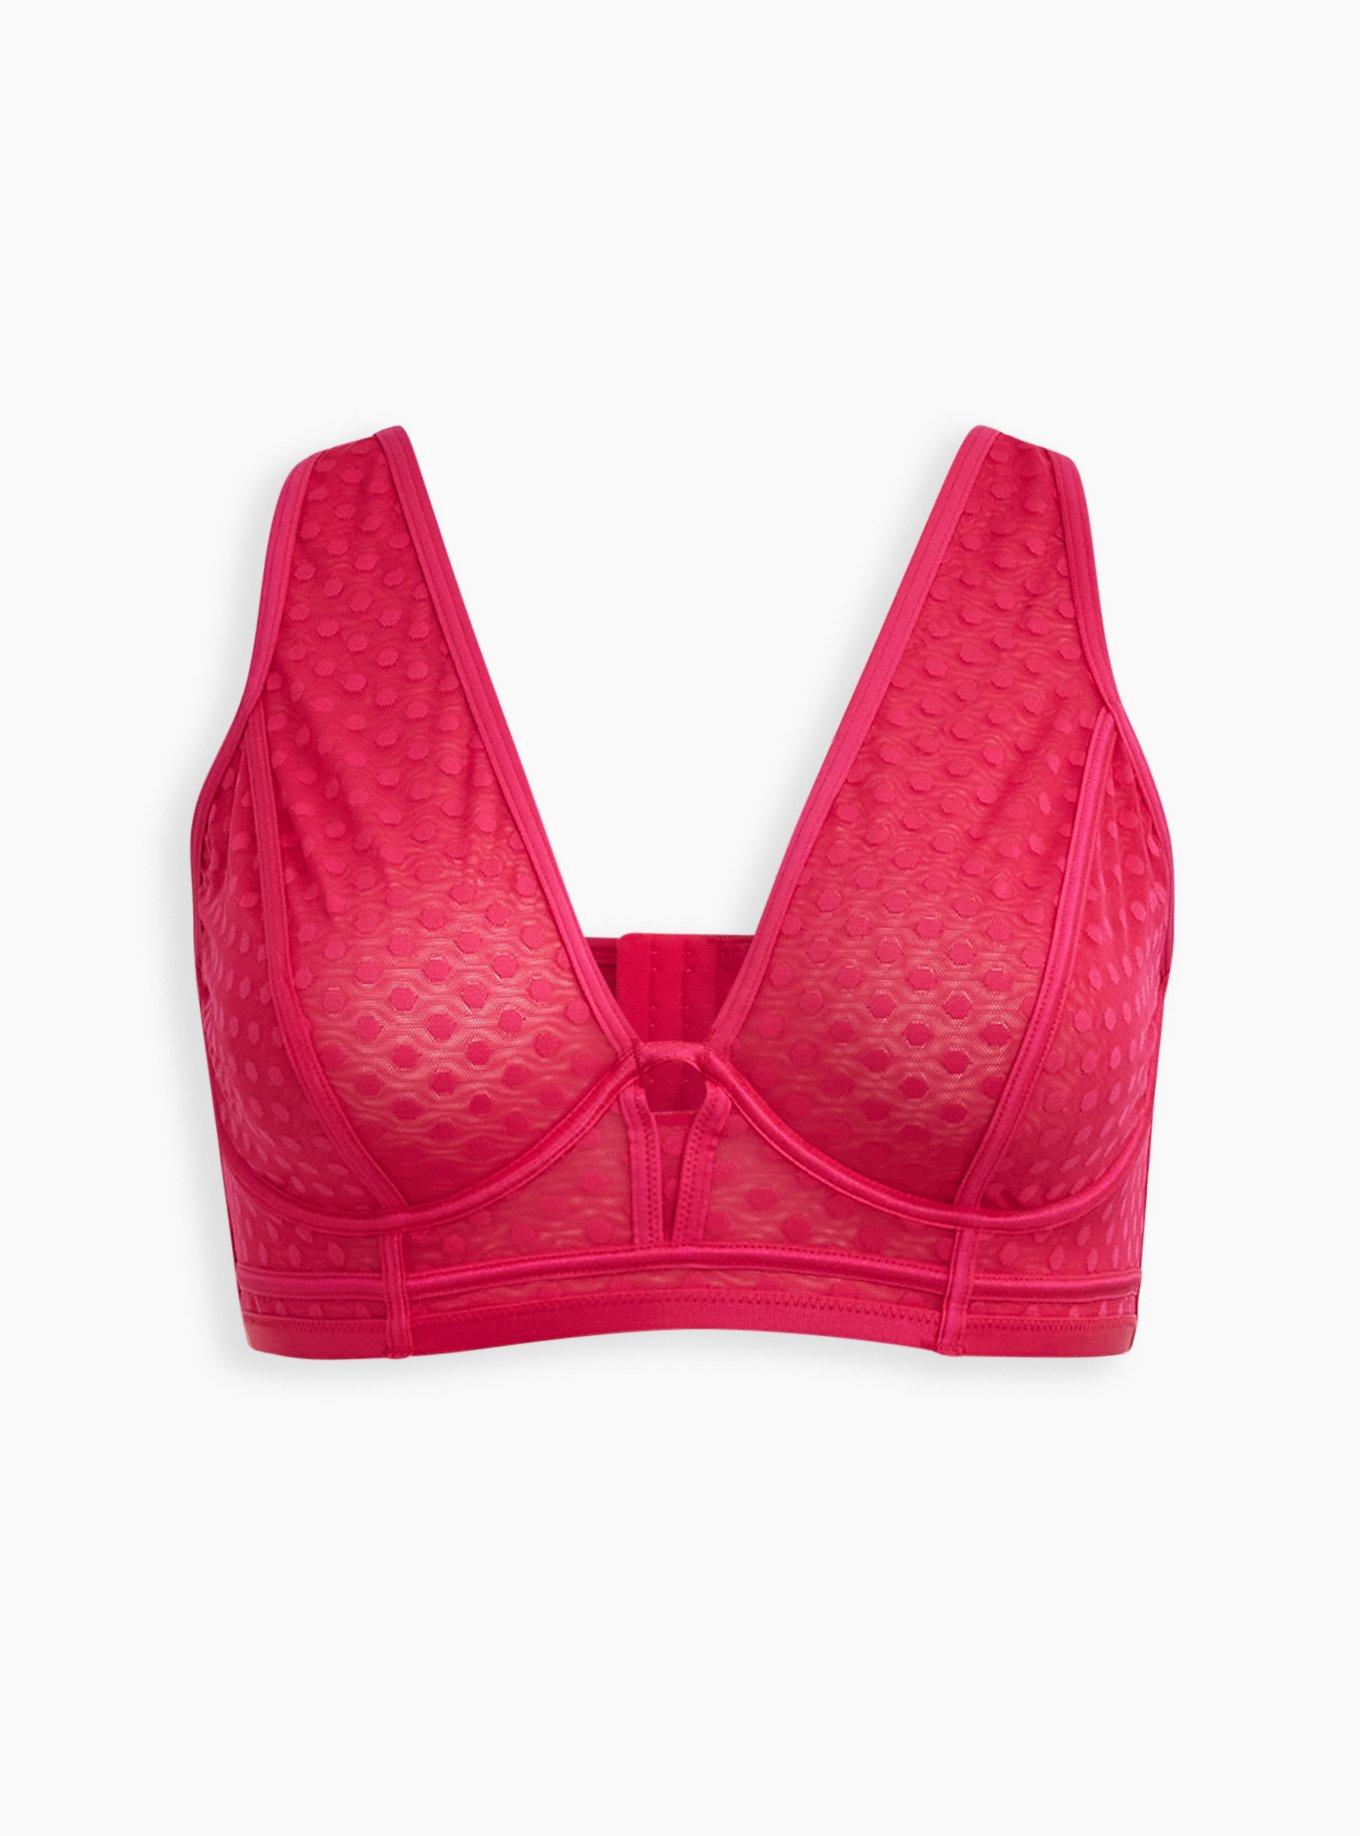 Torrid Pink Underwire Bralette & Matching Thong Plus Size 1X, 14/16